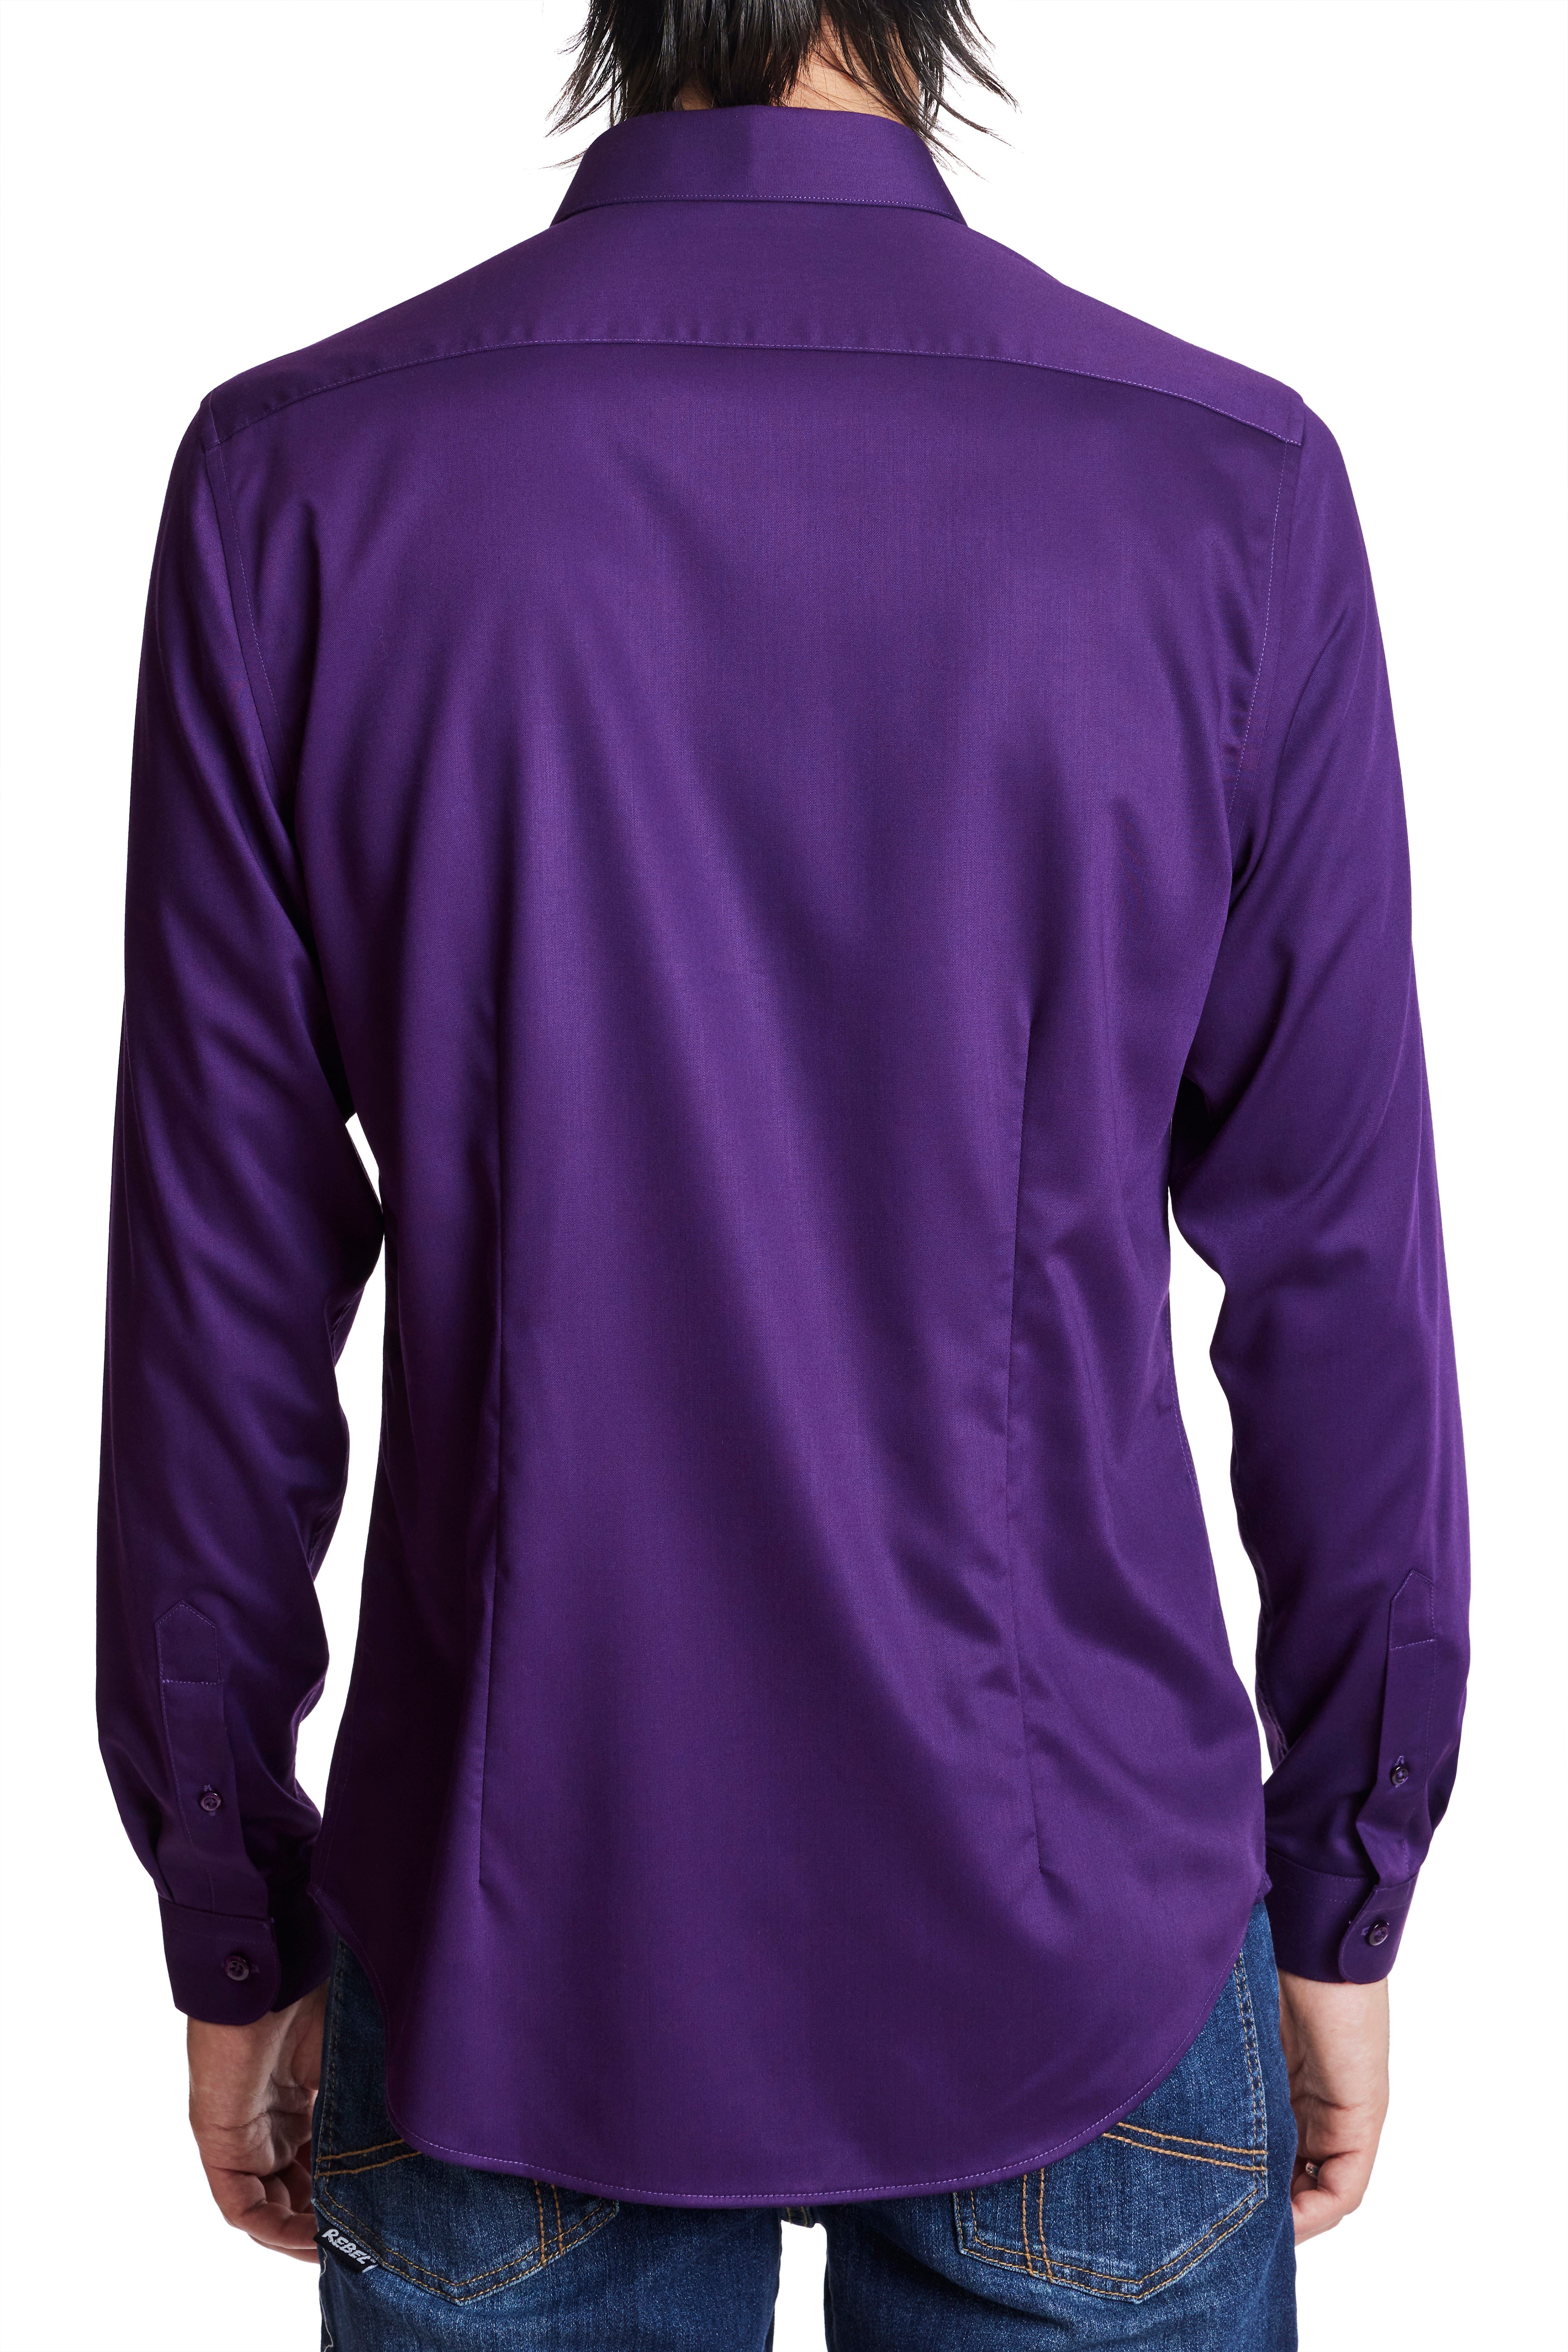 Samuel Spread Collar Shirt - Purple Lotus